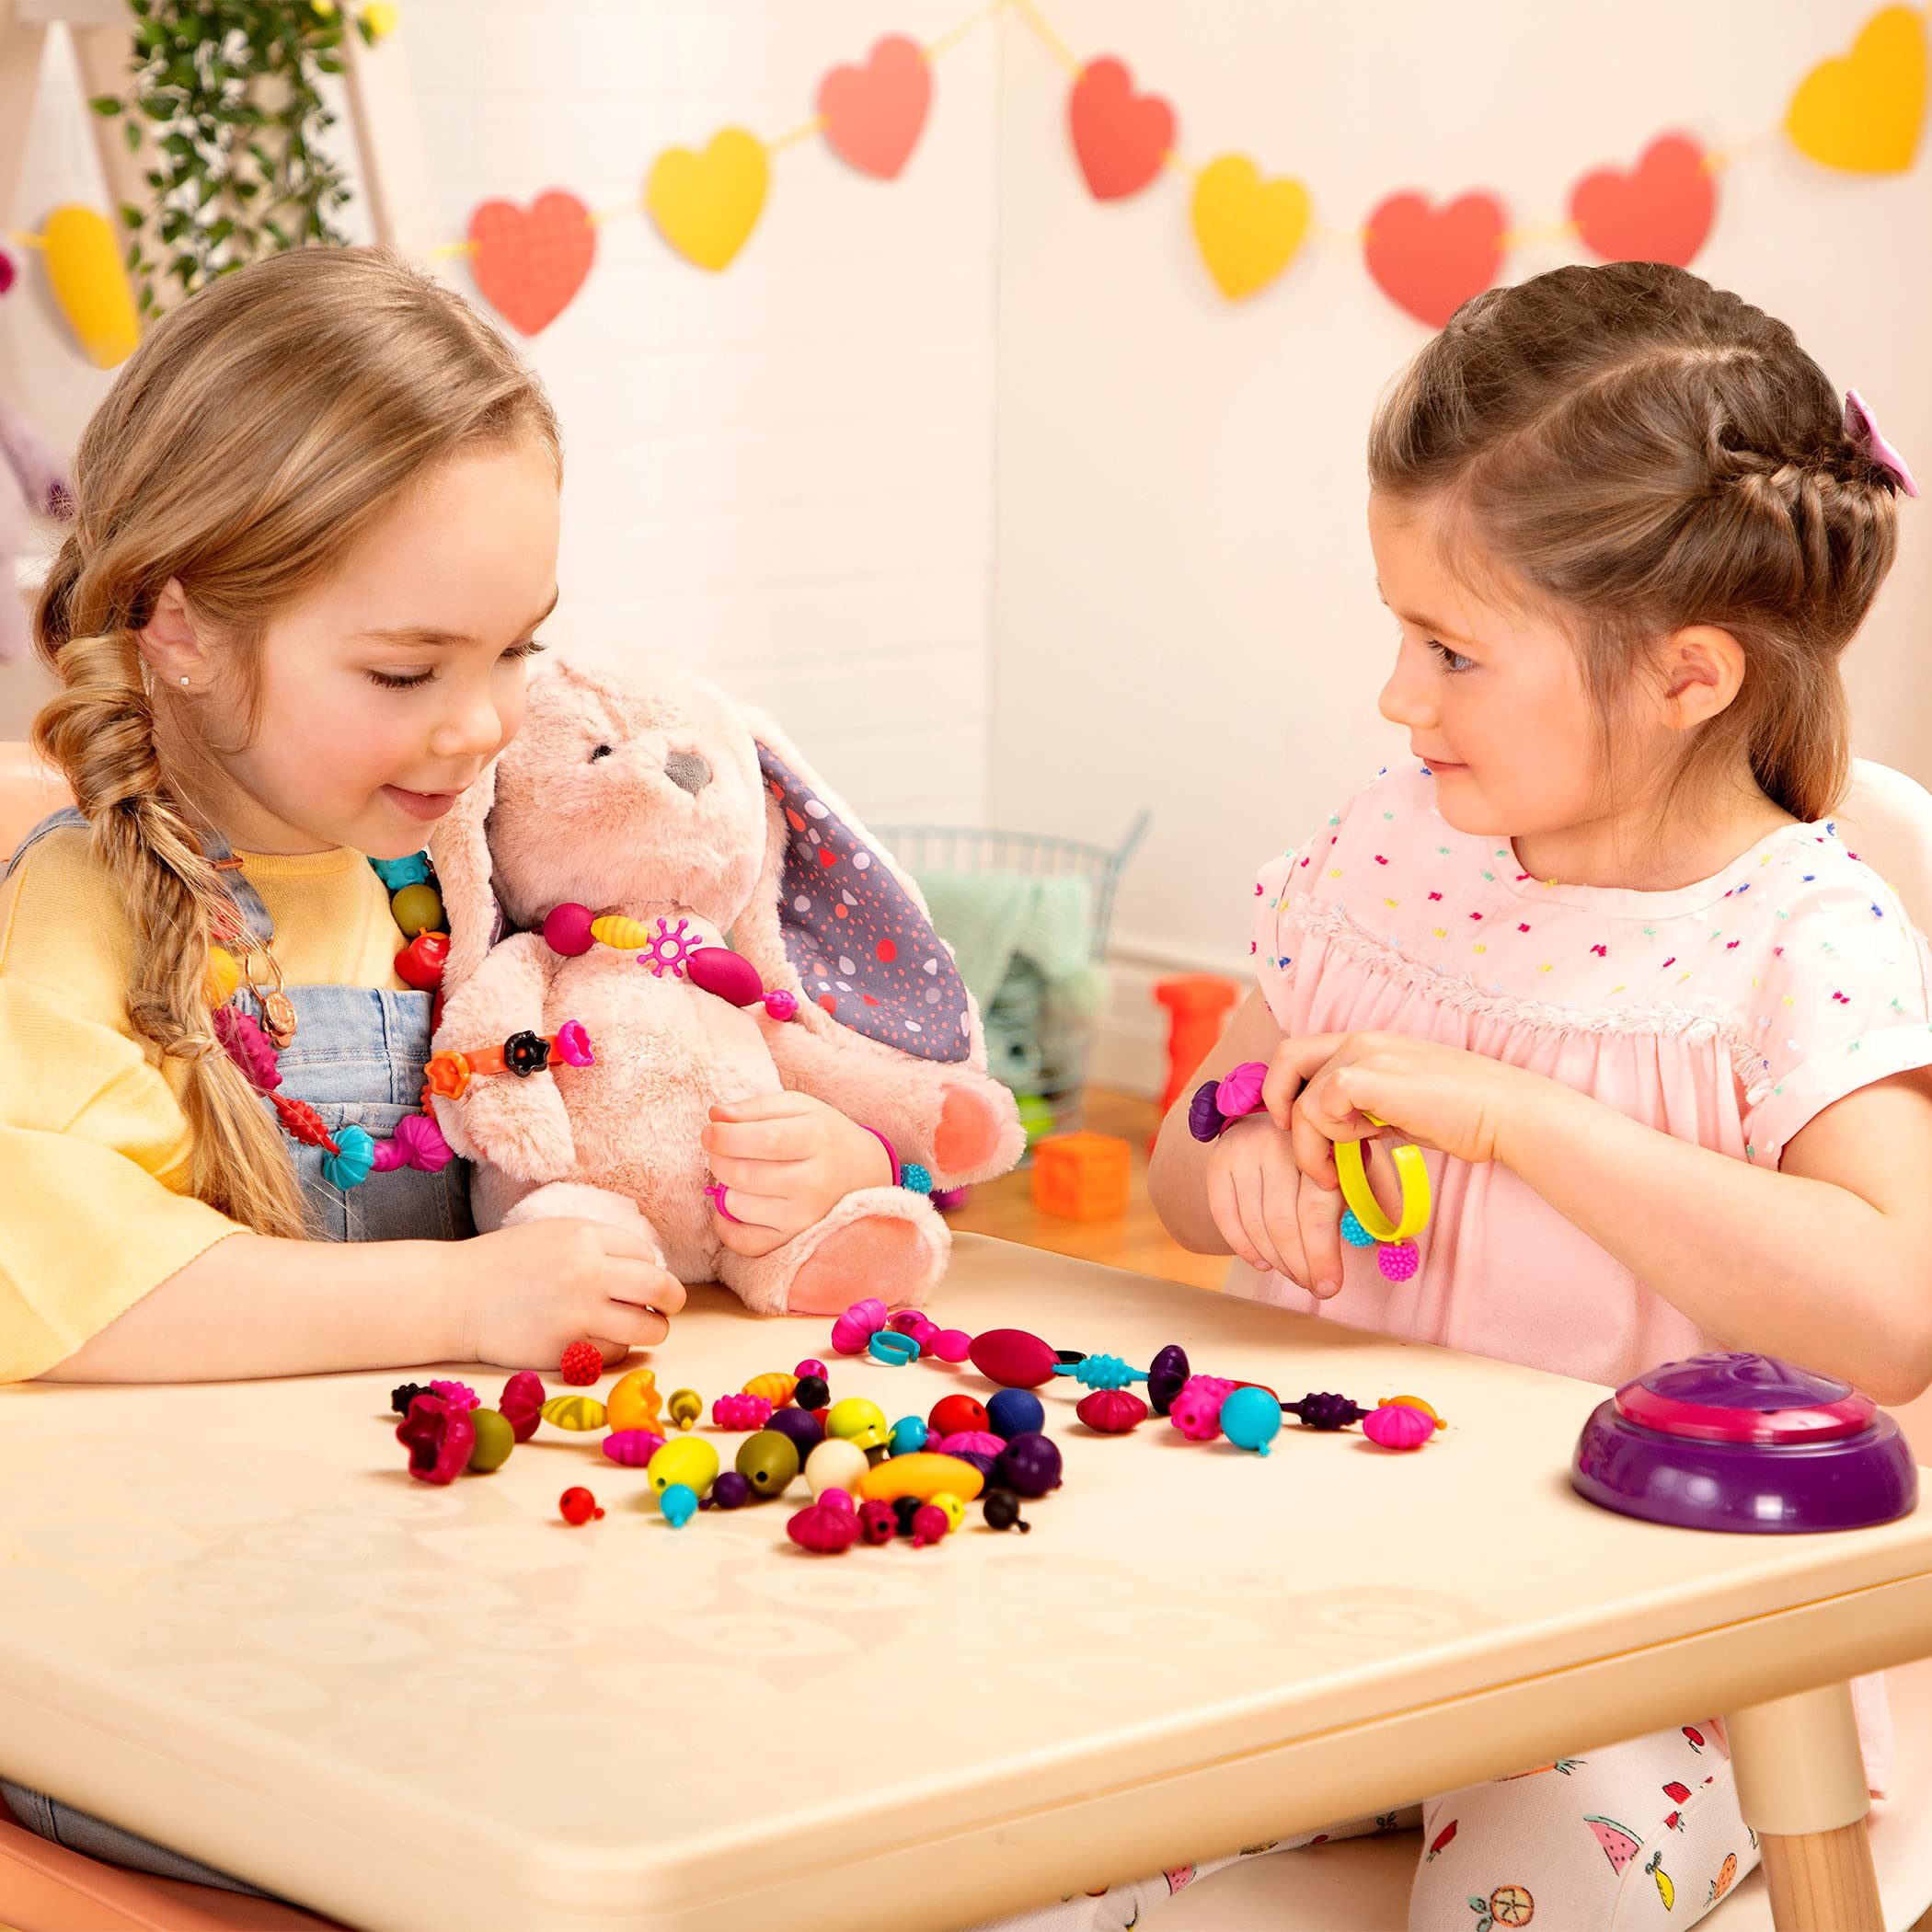 B. Toys - (500-Pcs) Pop Snap Bead Jewelry - DIY Jewelry Kit for Kids